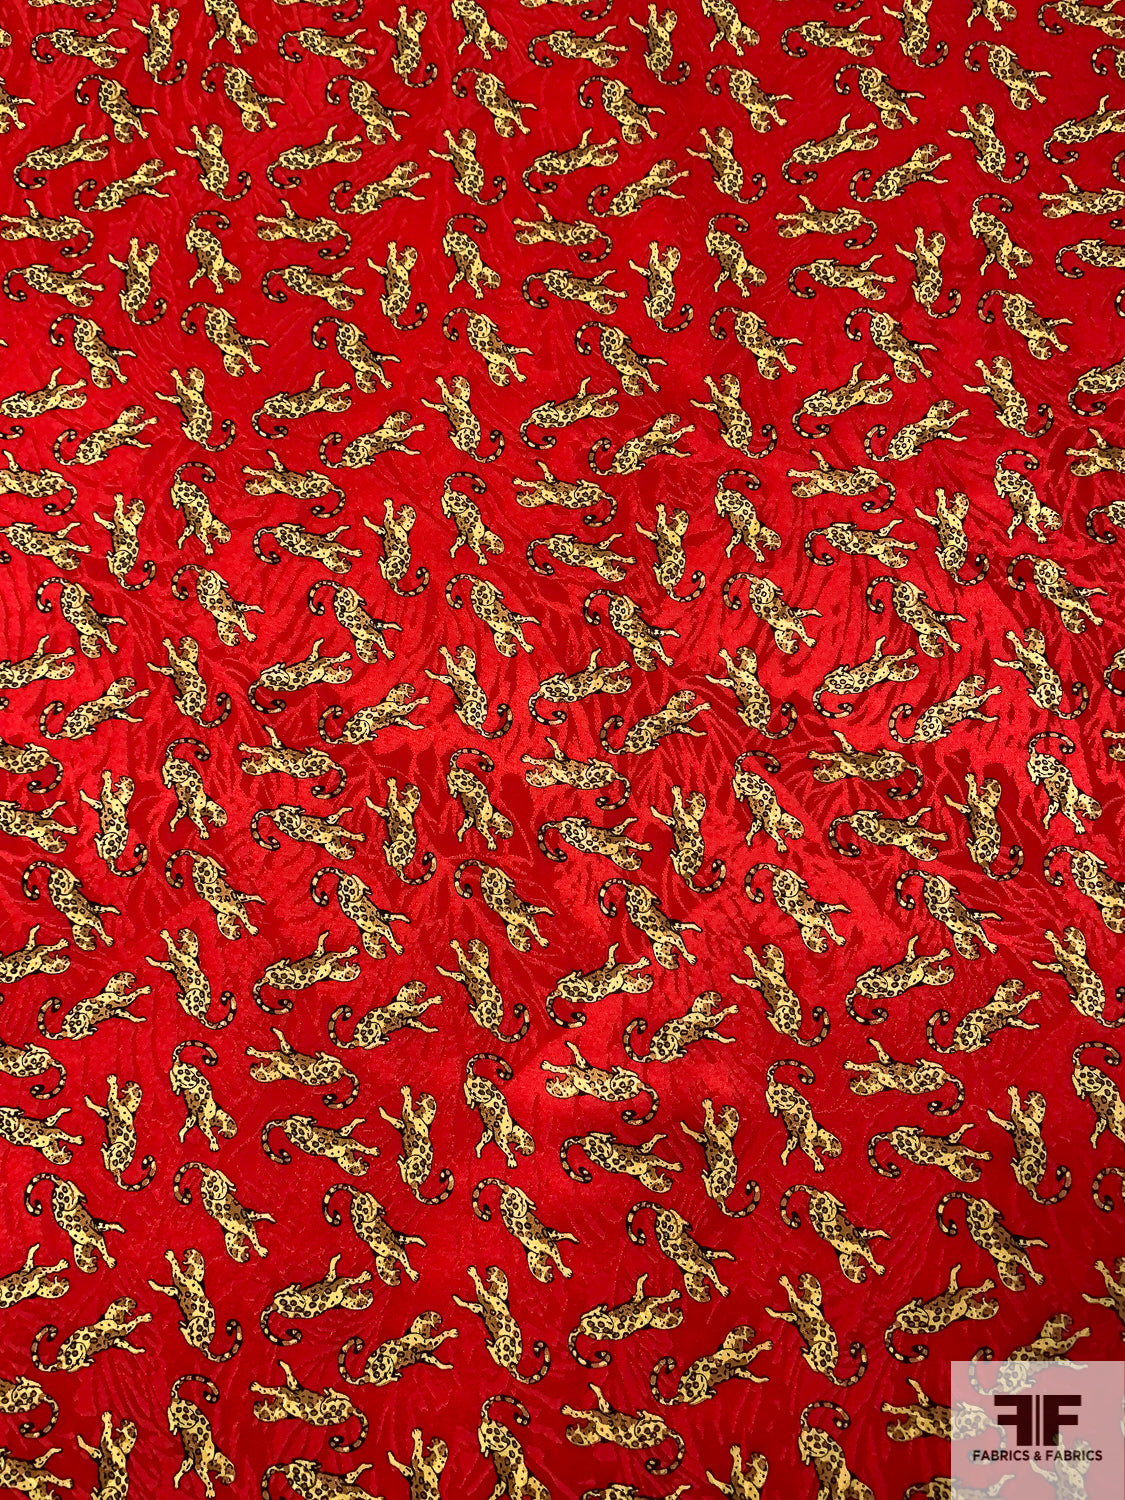 Cheetahs Printed on Silk Charmeuse Jacquard Panel - Vibrant Red / Caramel / Yellow / Black